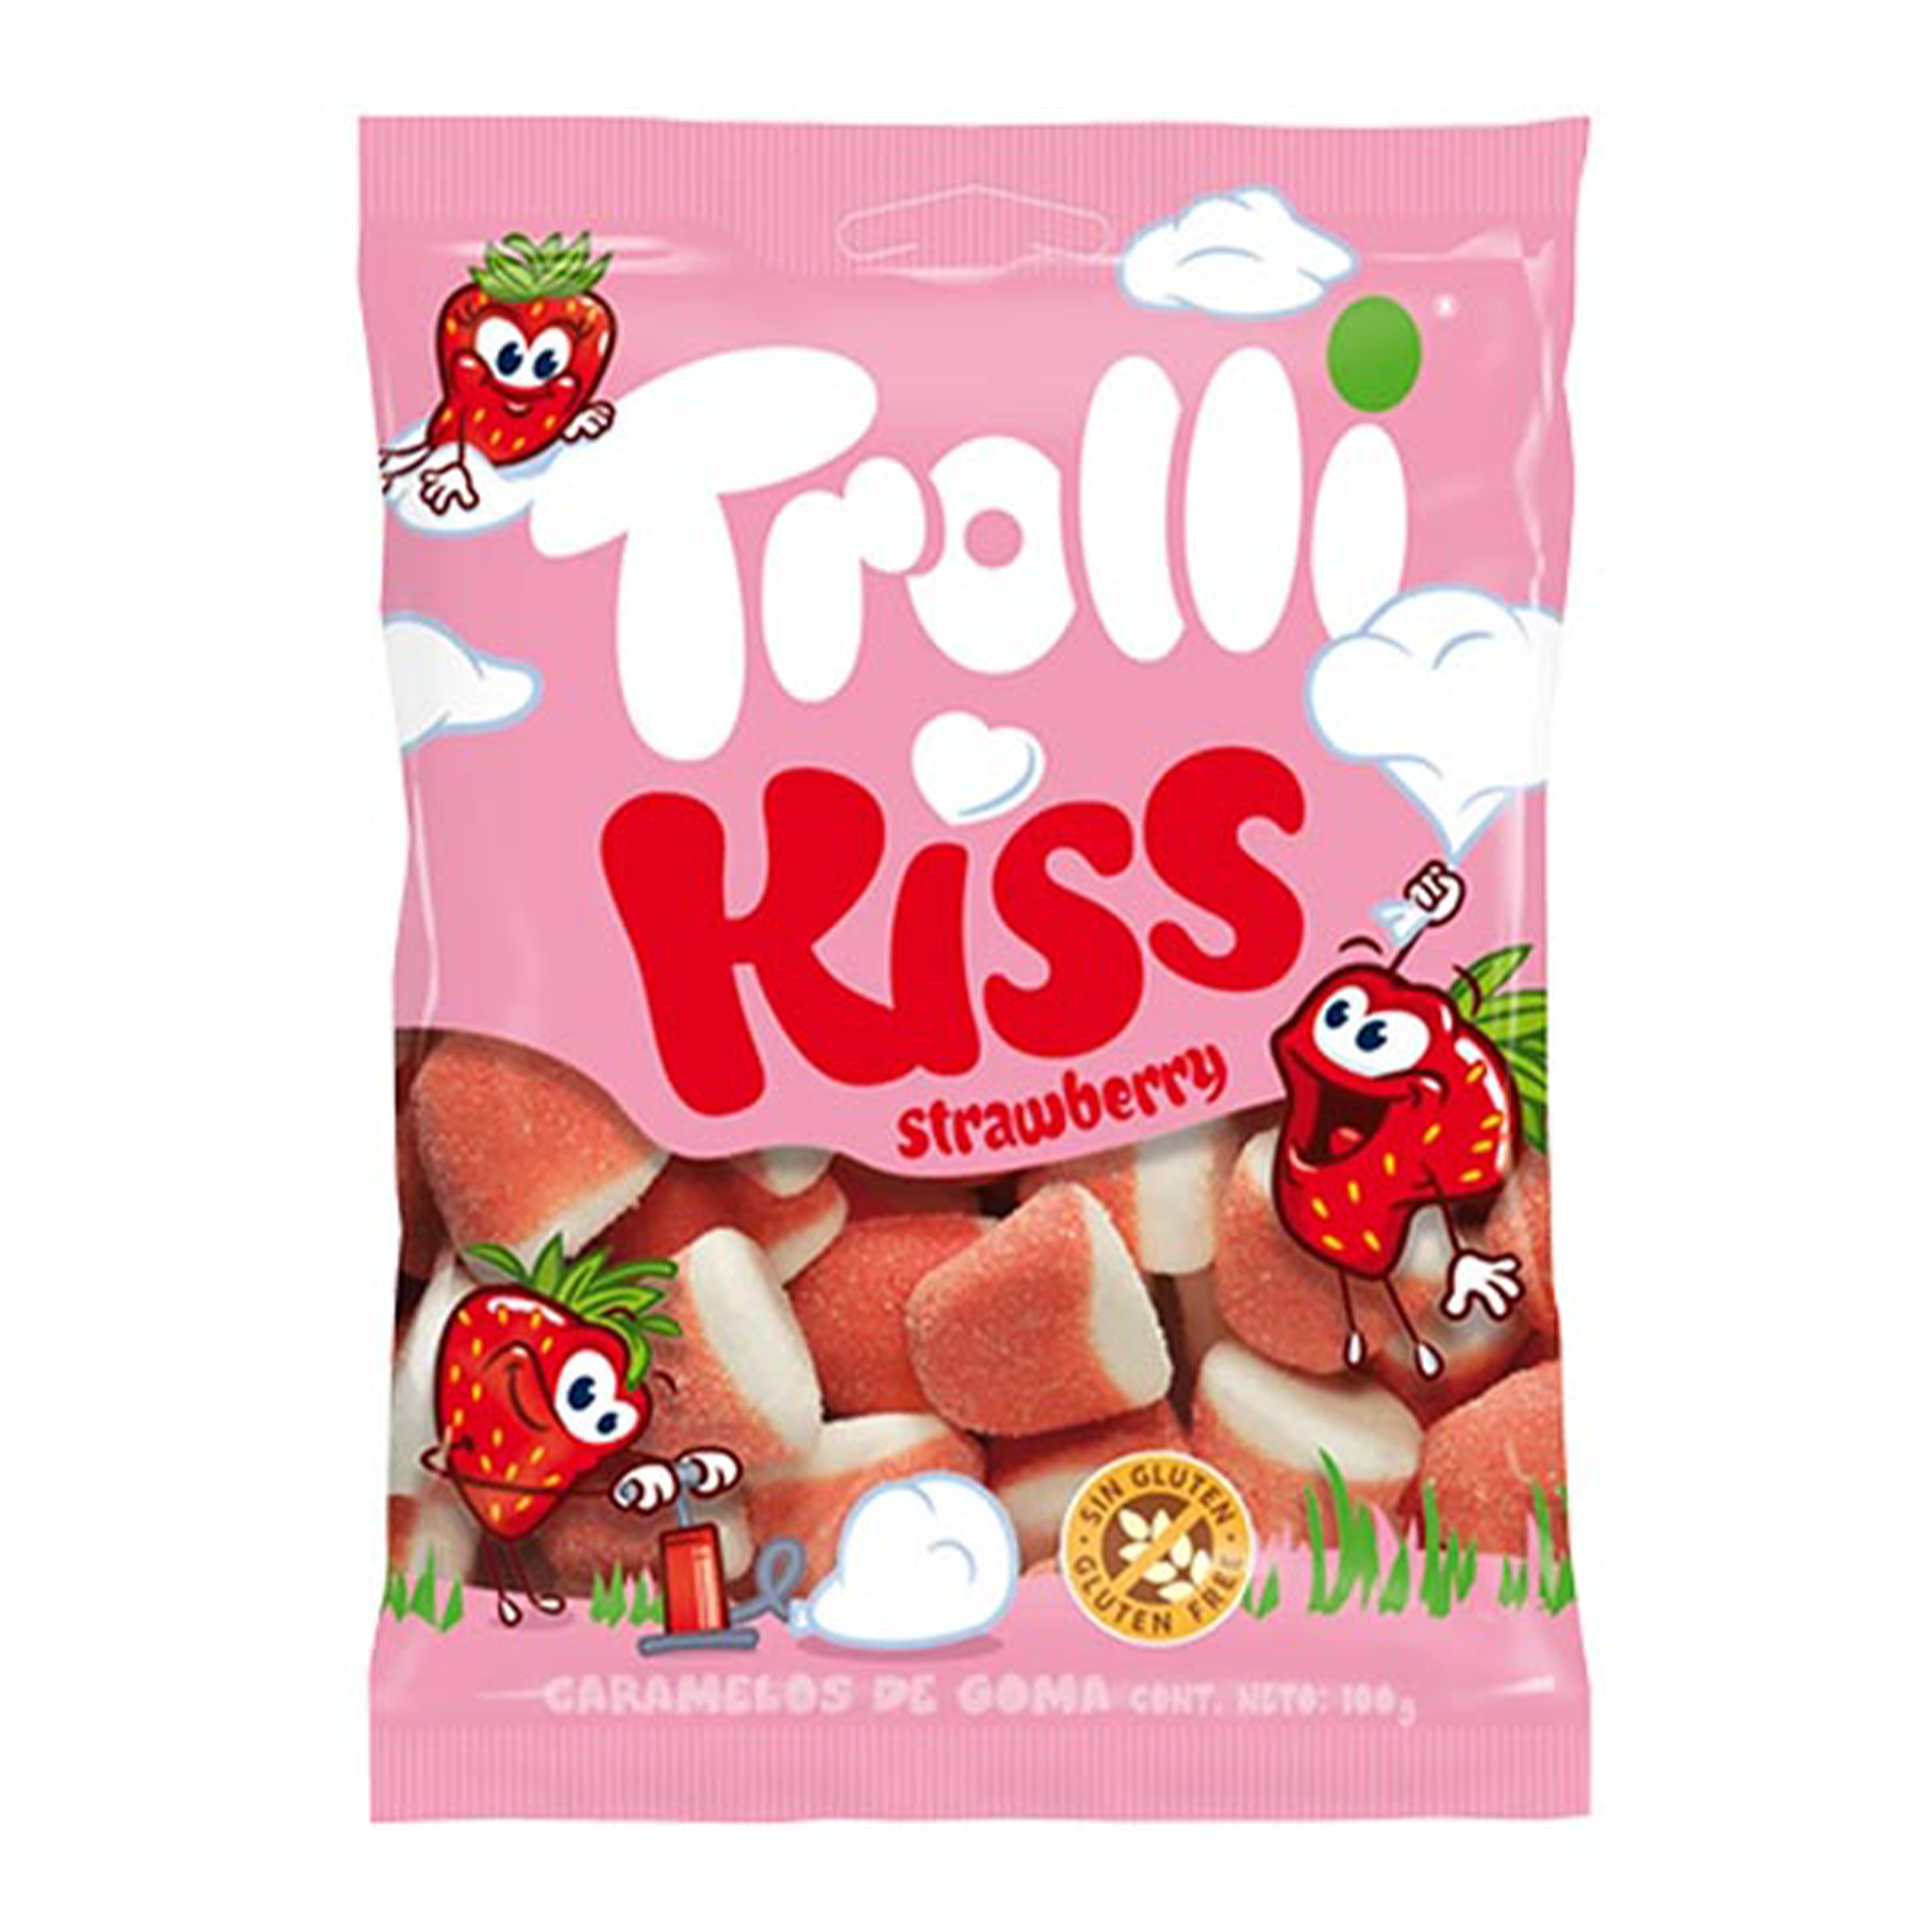 Trolli Strawberry Kiss (Europe)